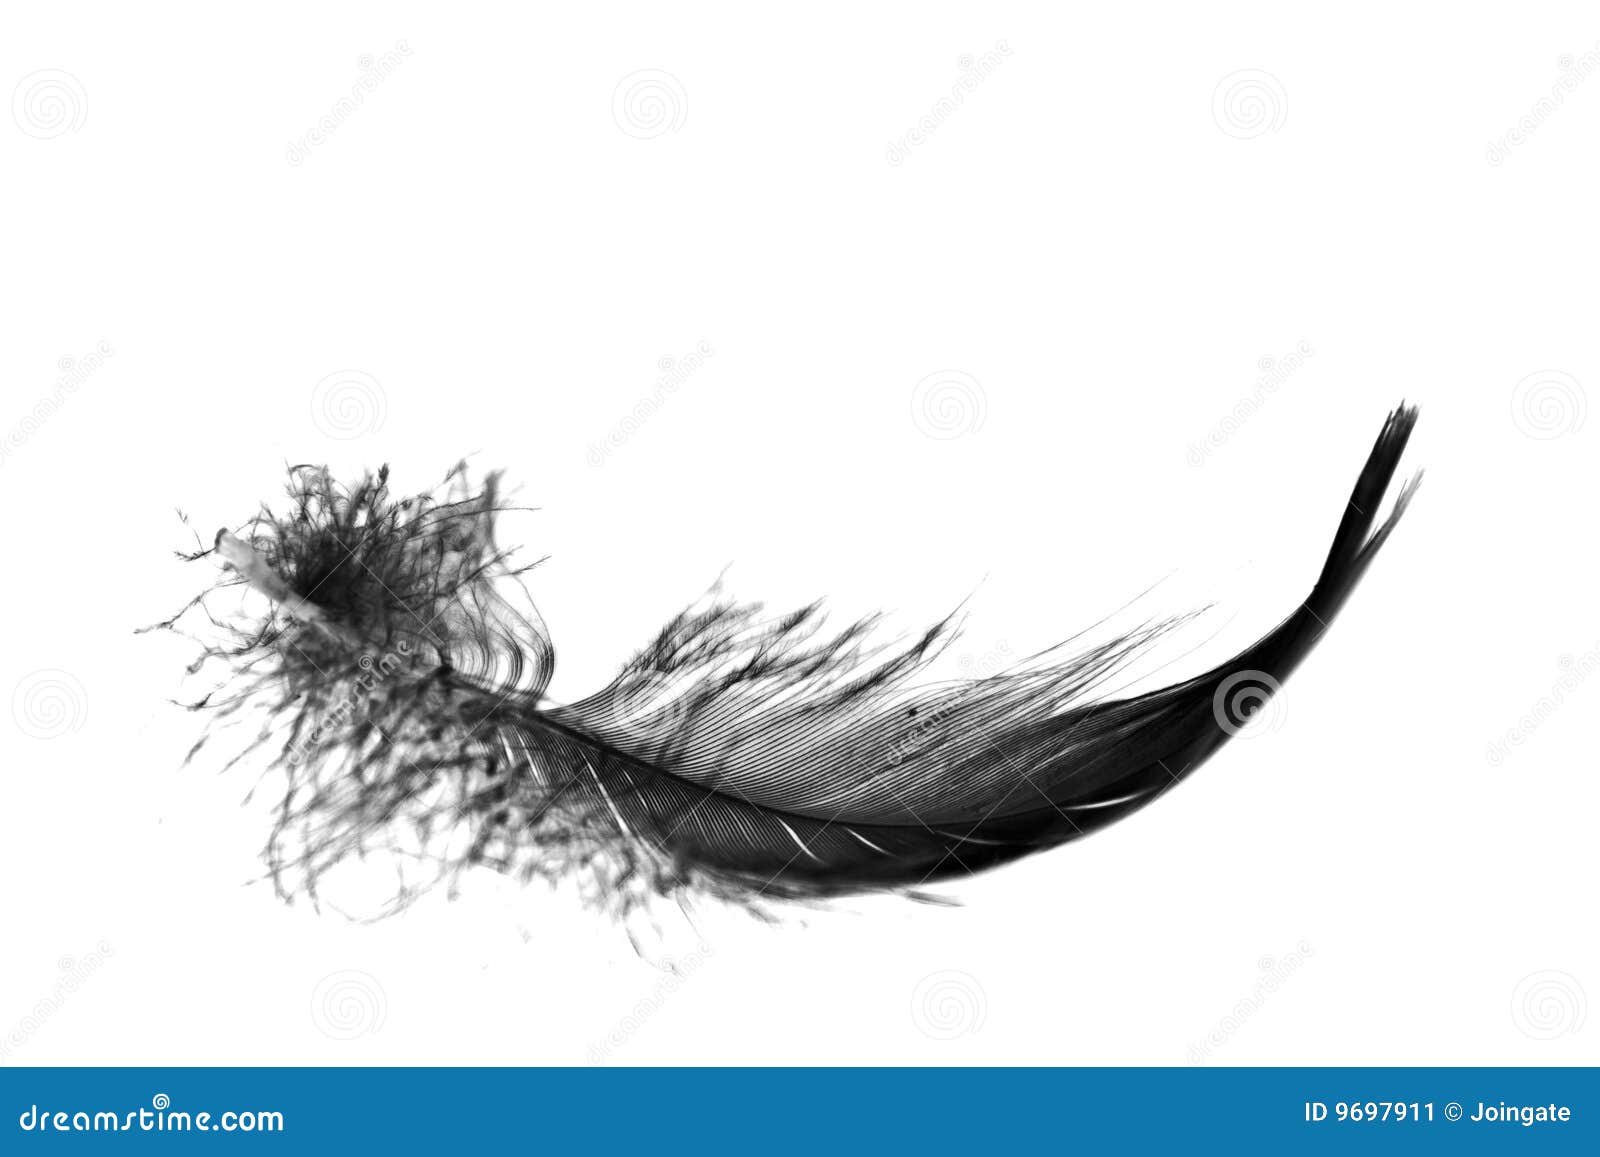 Black feather stock image. 